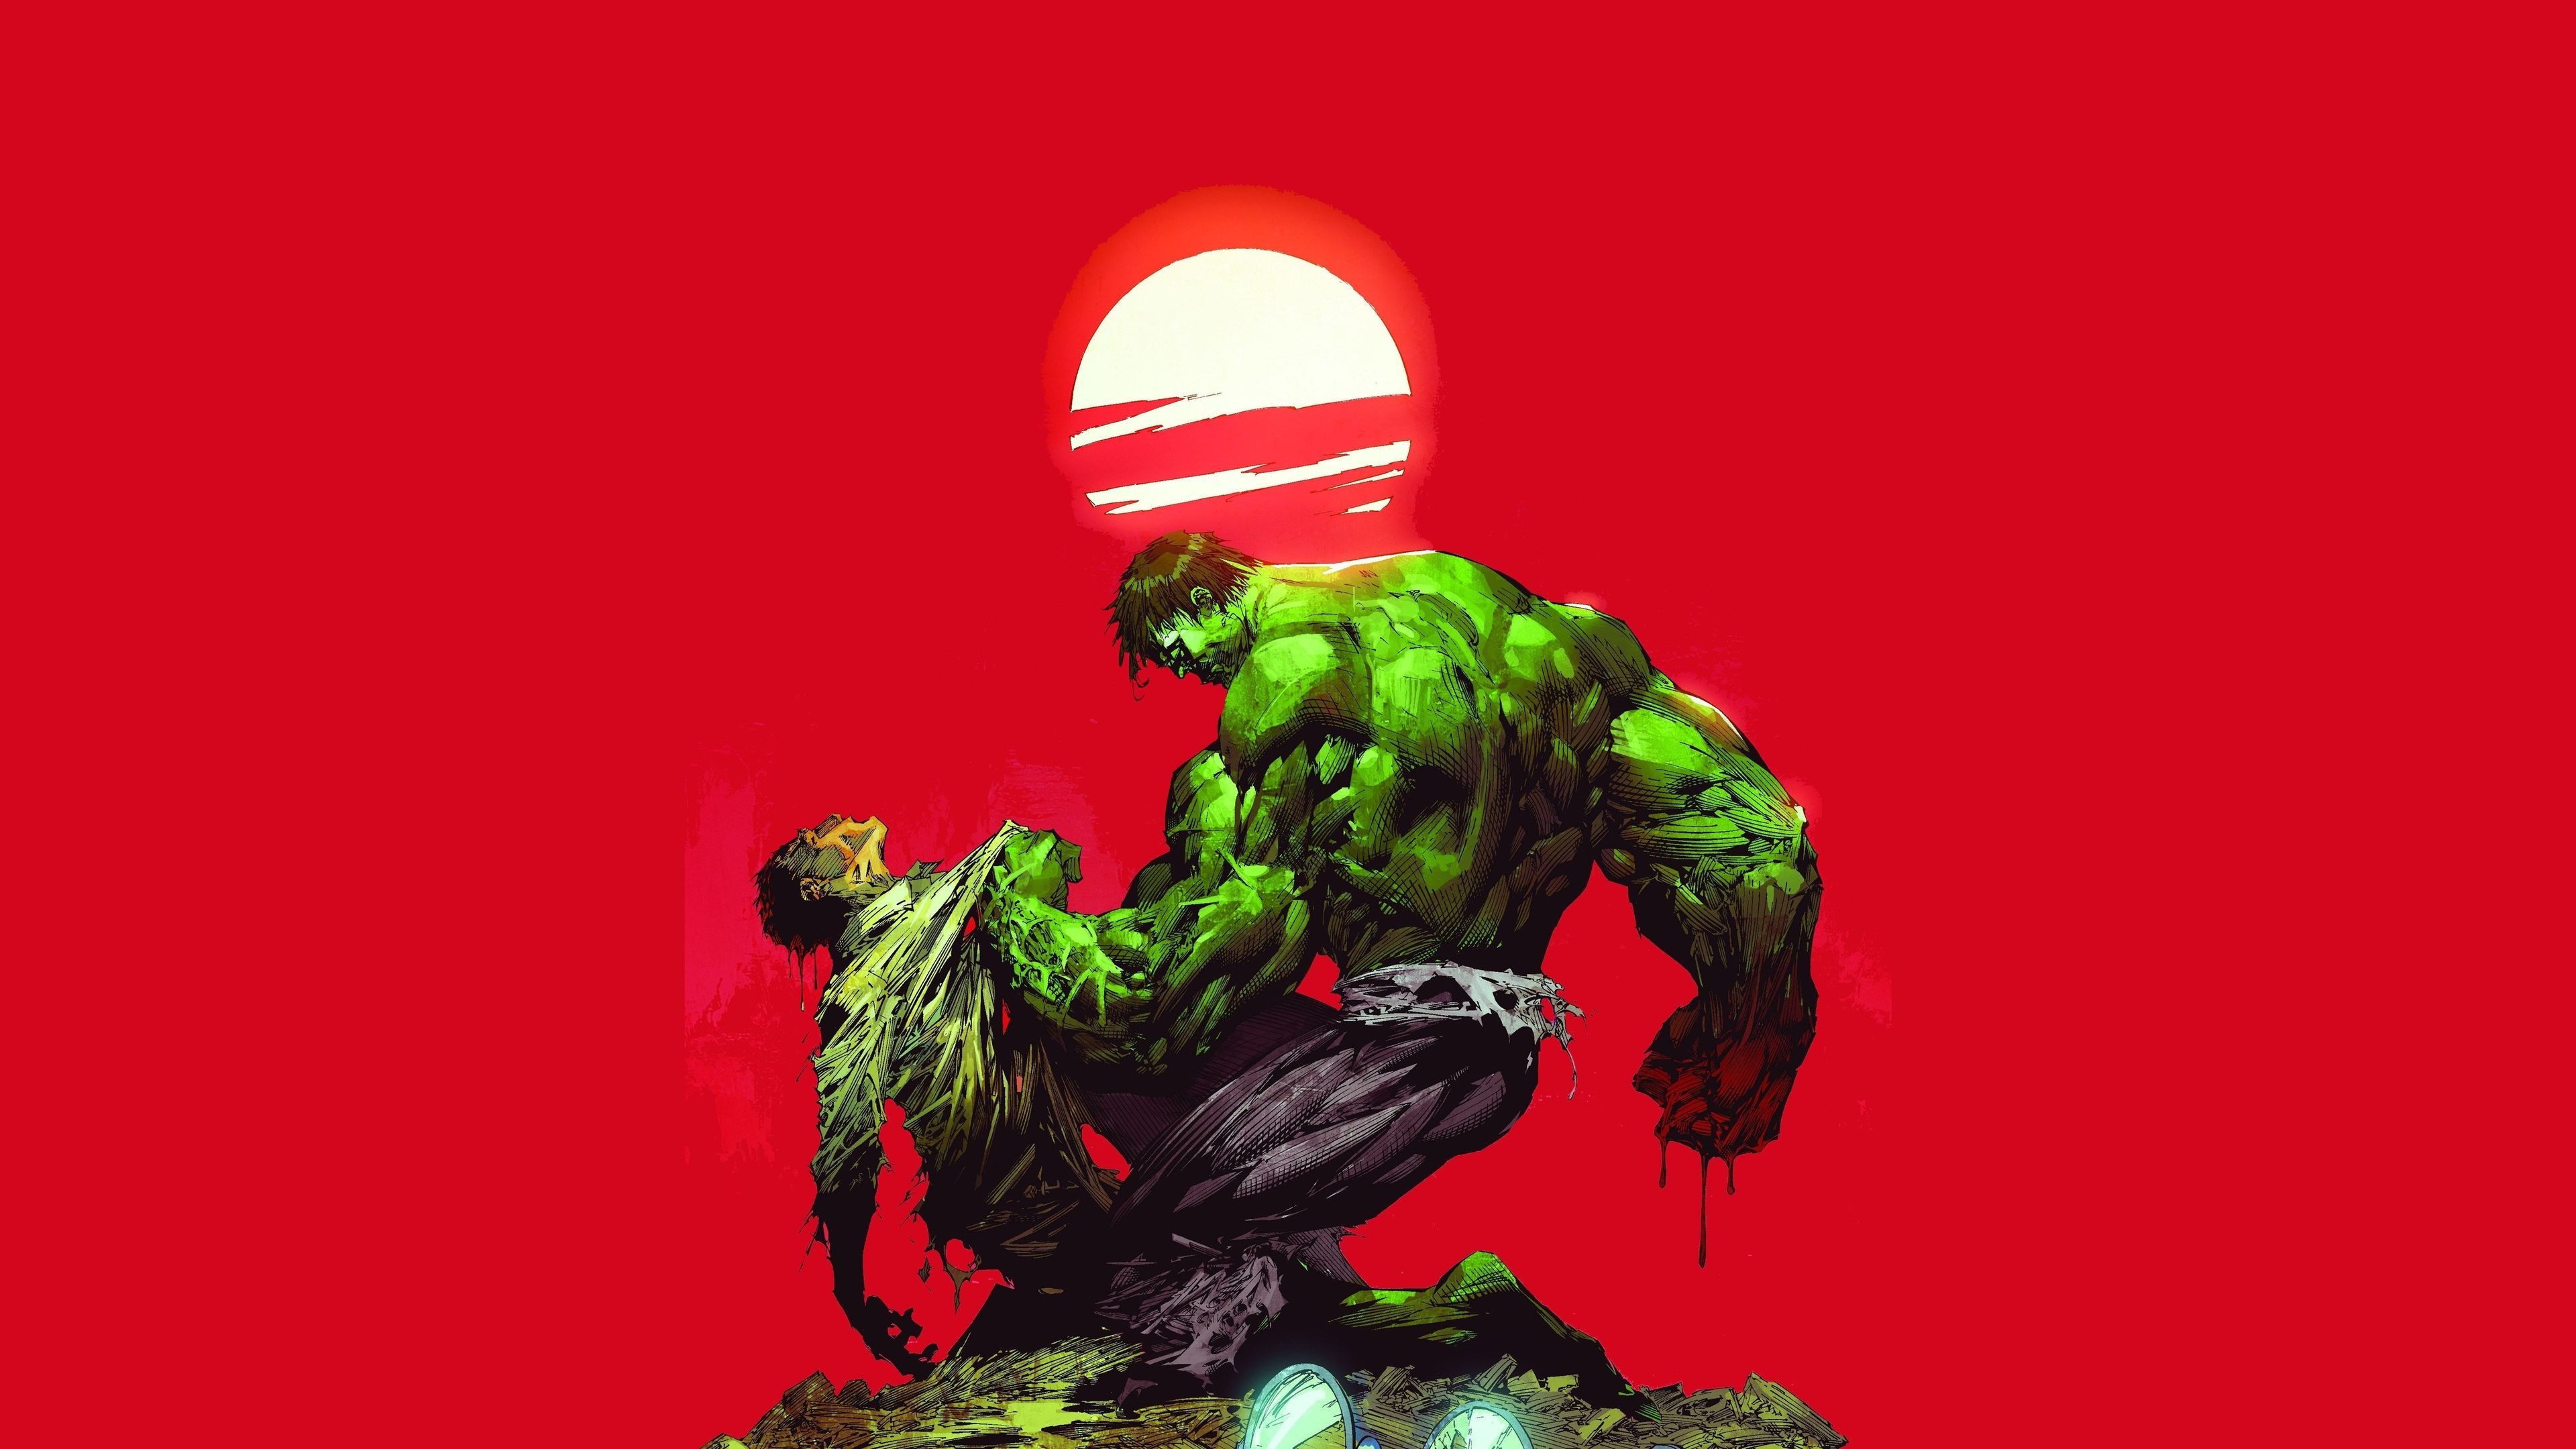 Incredible Hulk, Bruce Banner vs Hulk wallpaper, Clash of the titans, Intense Hulk battle, 3840x2160 4K Desktop